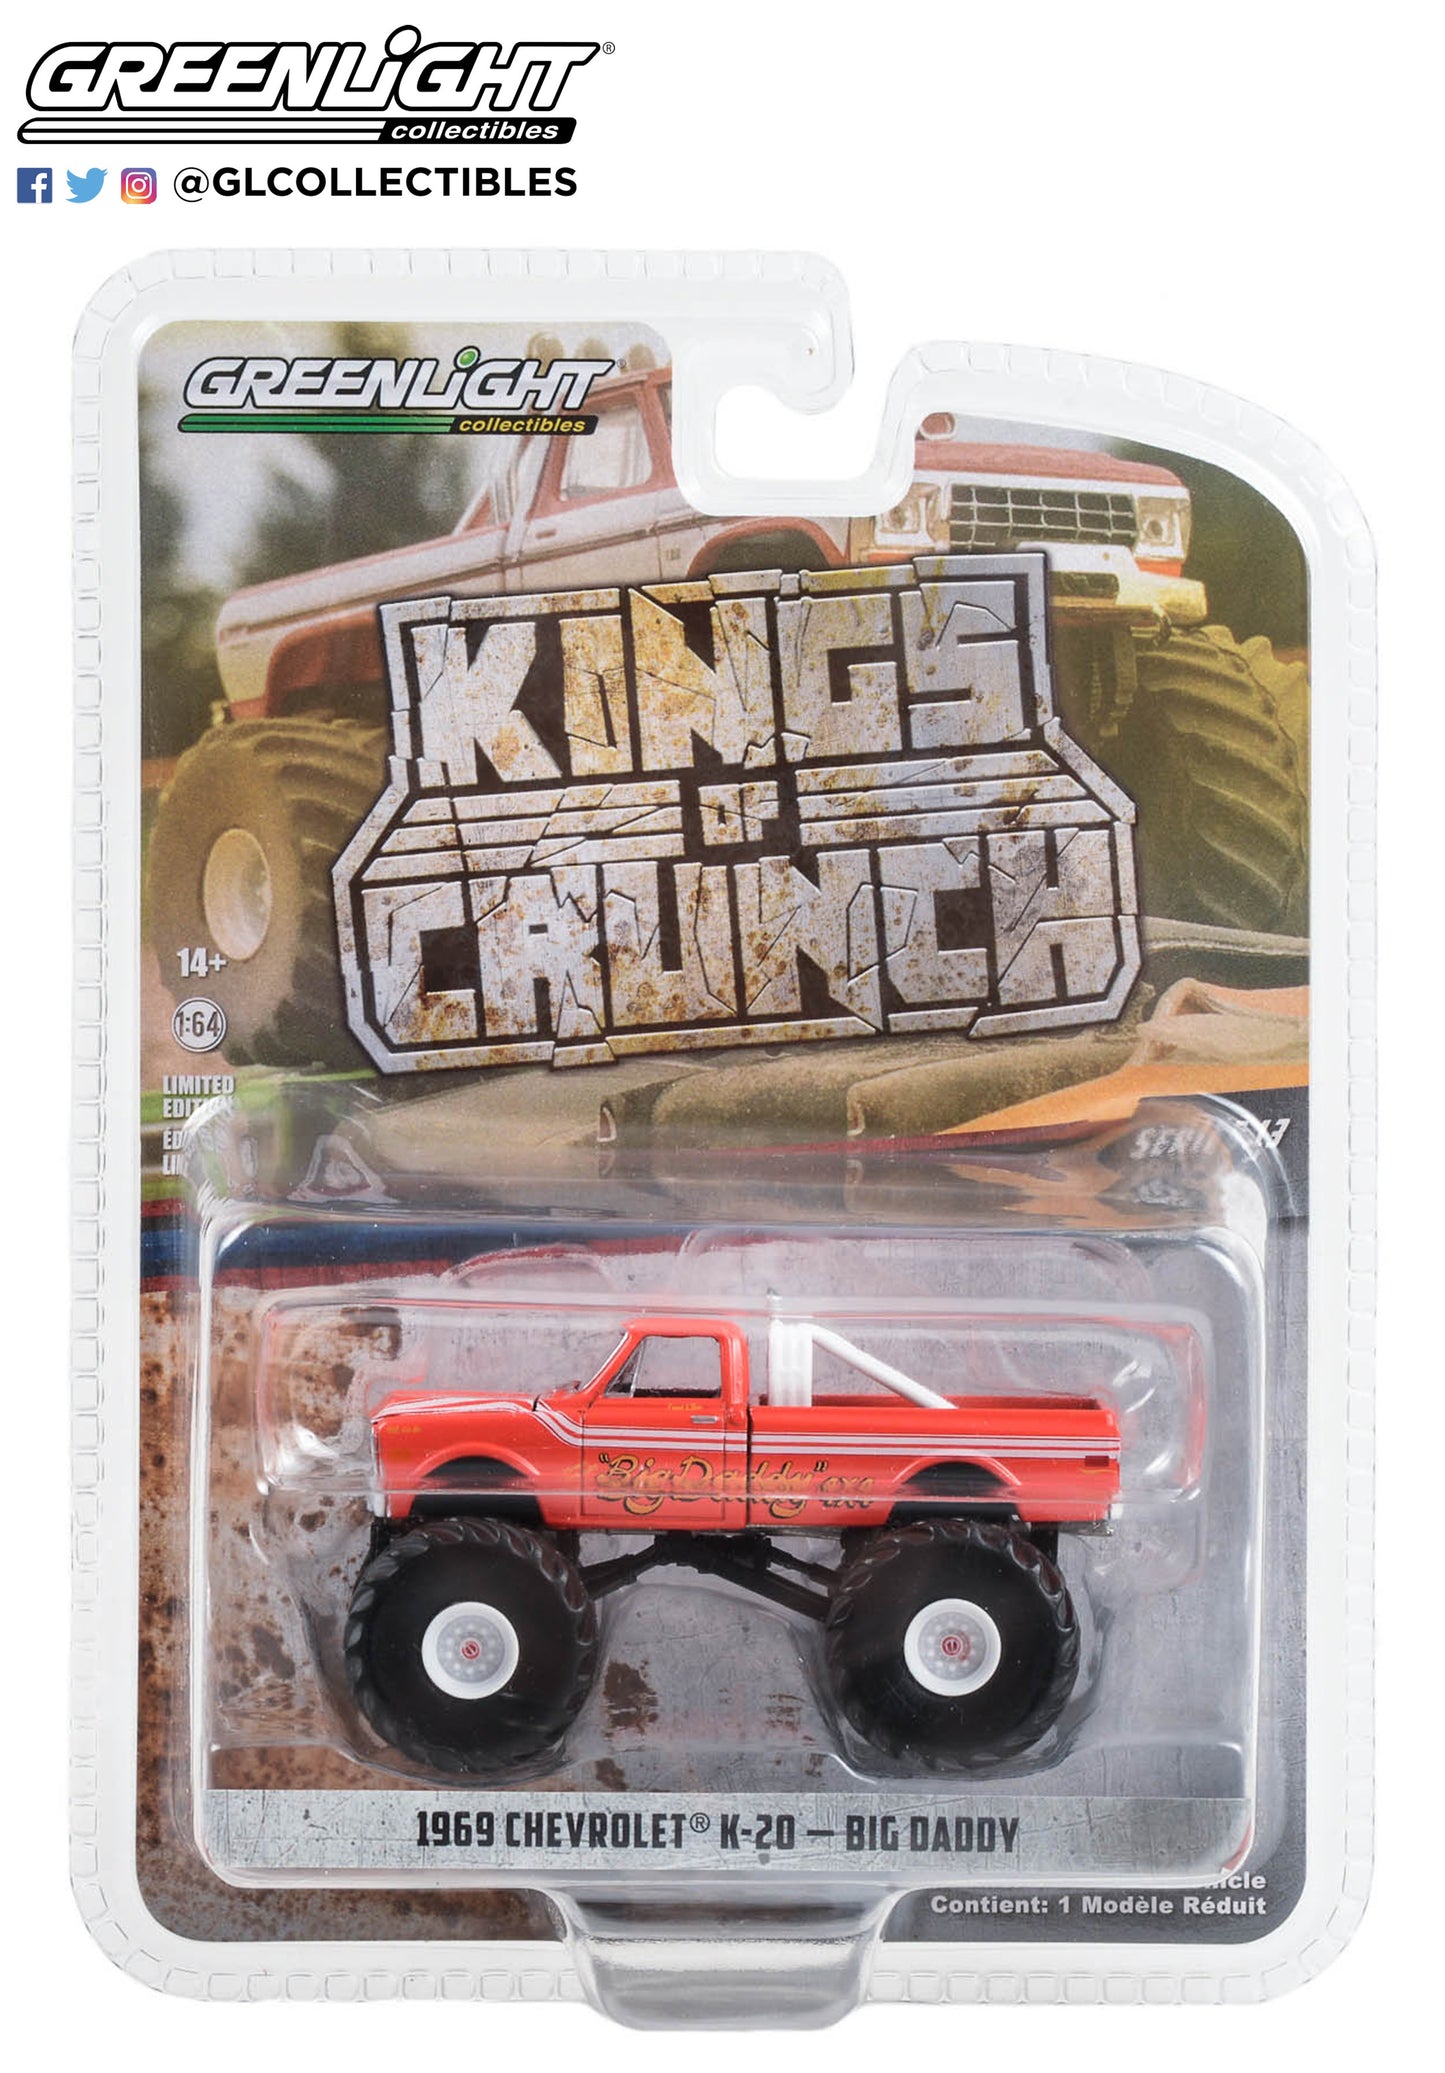 GreenLight 1:64 Kings of Crunch Series 13 - Big Daddy - 1969 Chevrolet K20 Monster Truck 49130-A